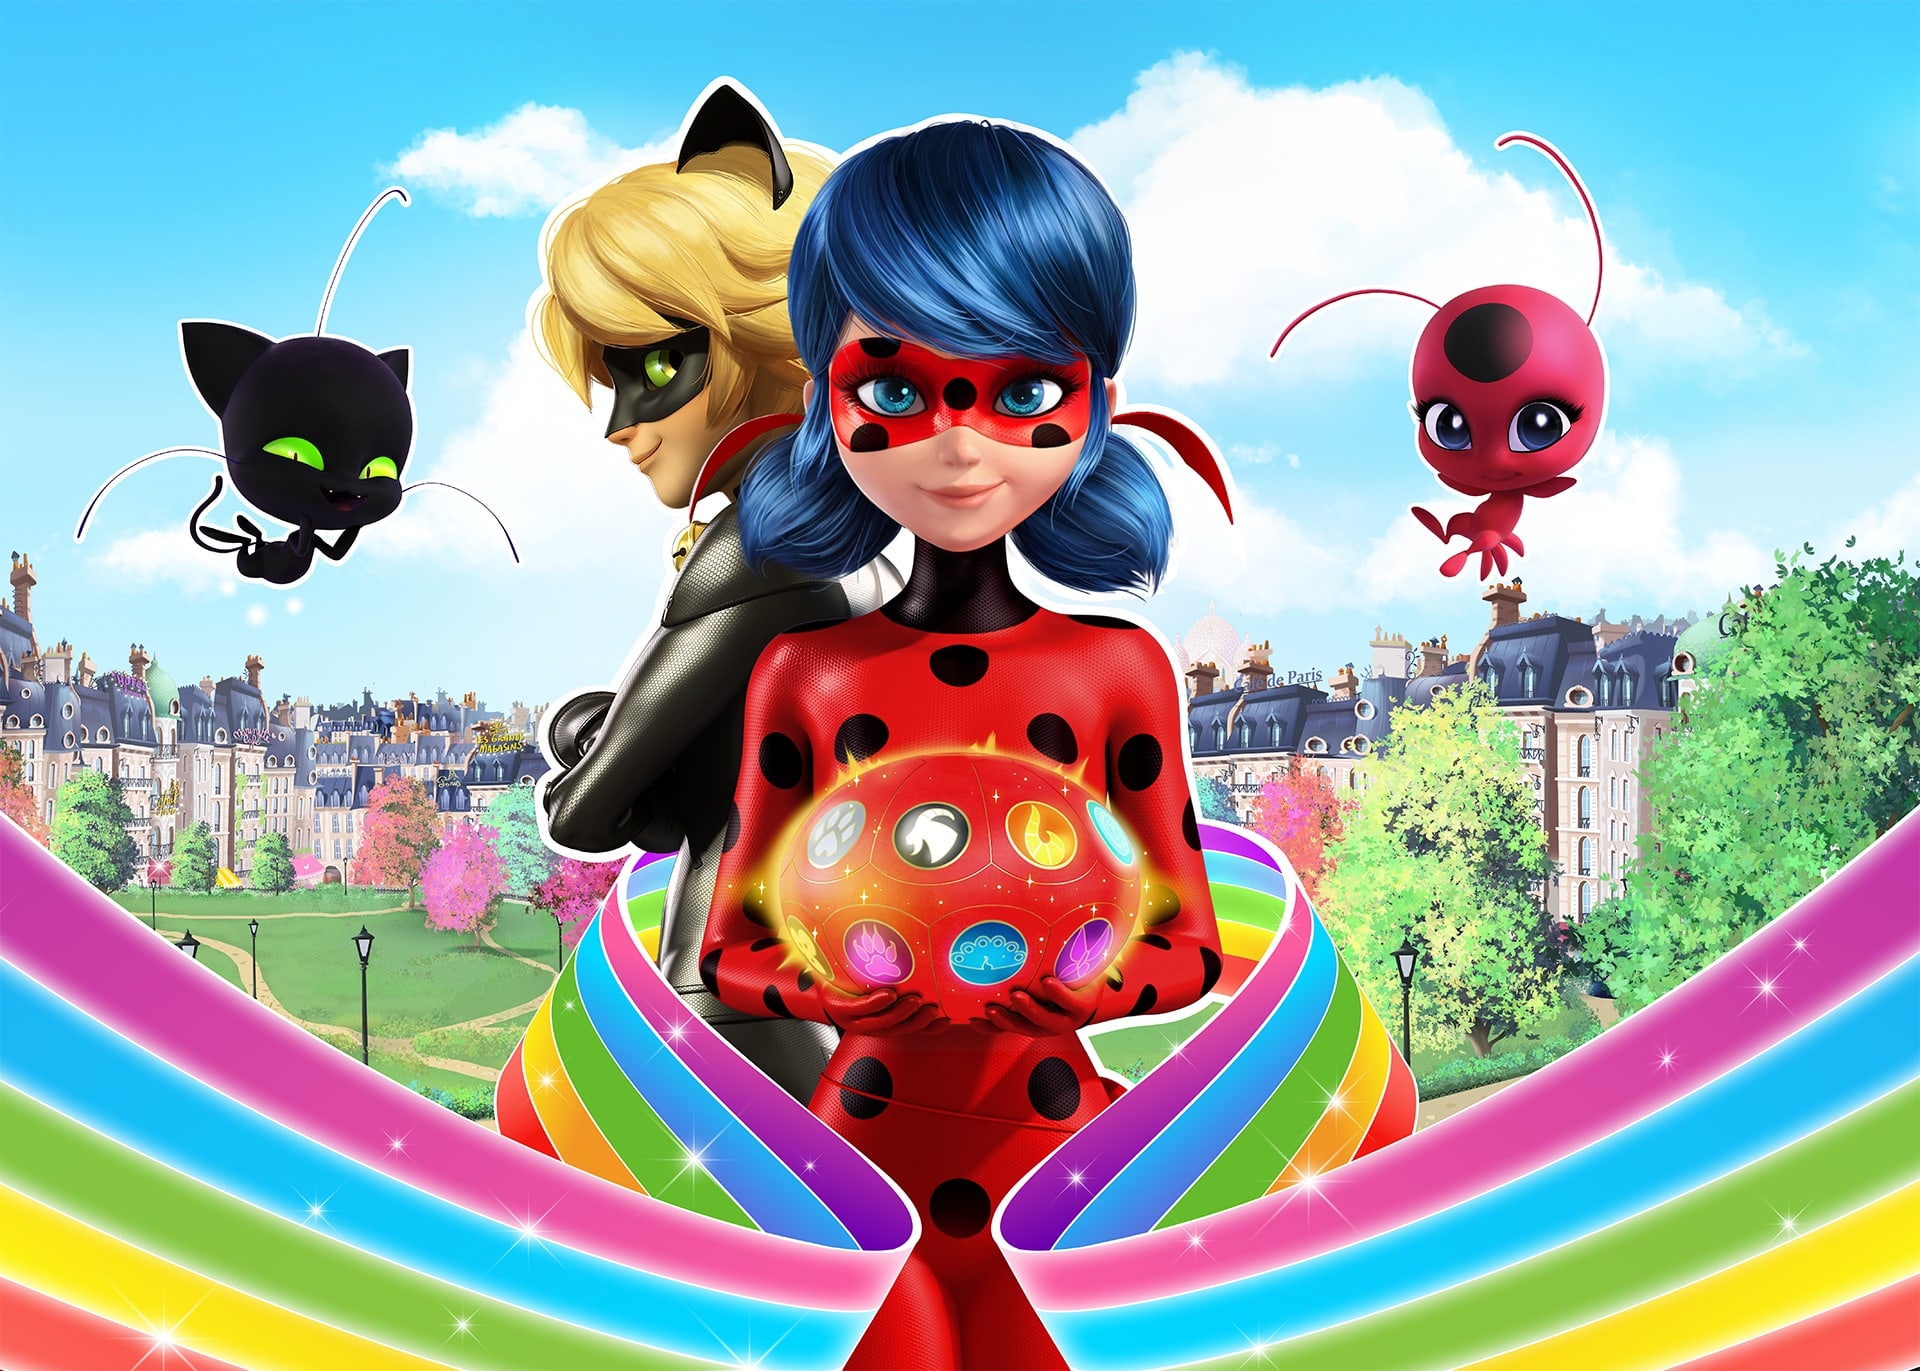 Zag Heroez Miraculous™- Tales of Ladybug & Cat Noir - Official Site